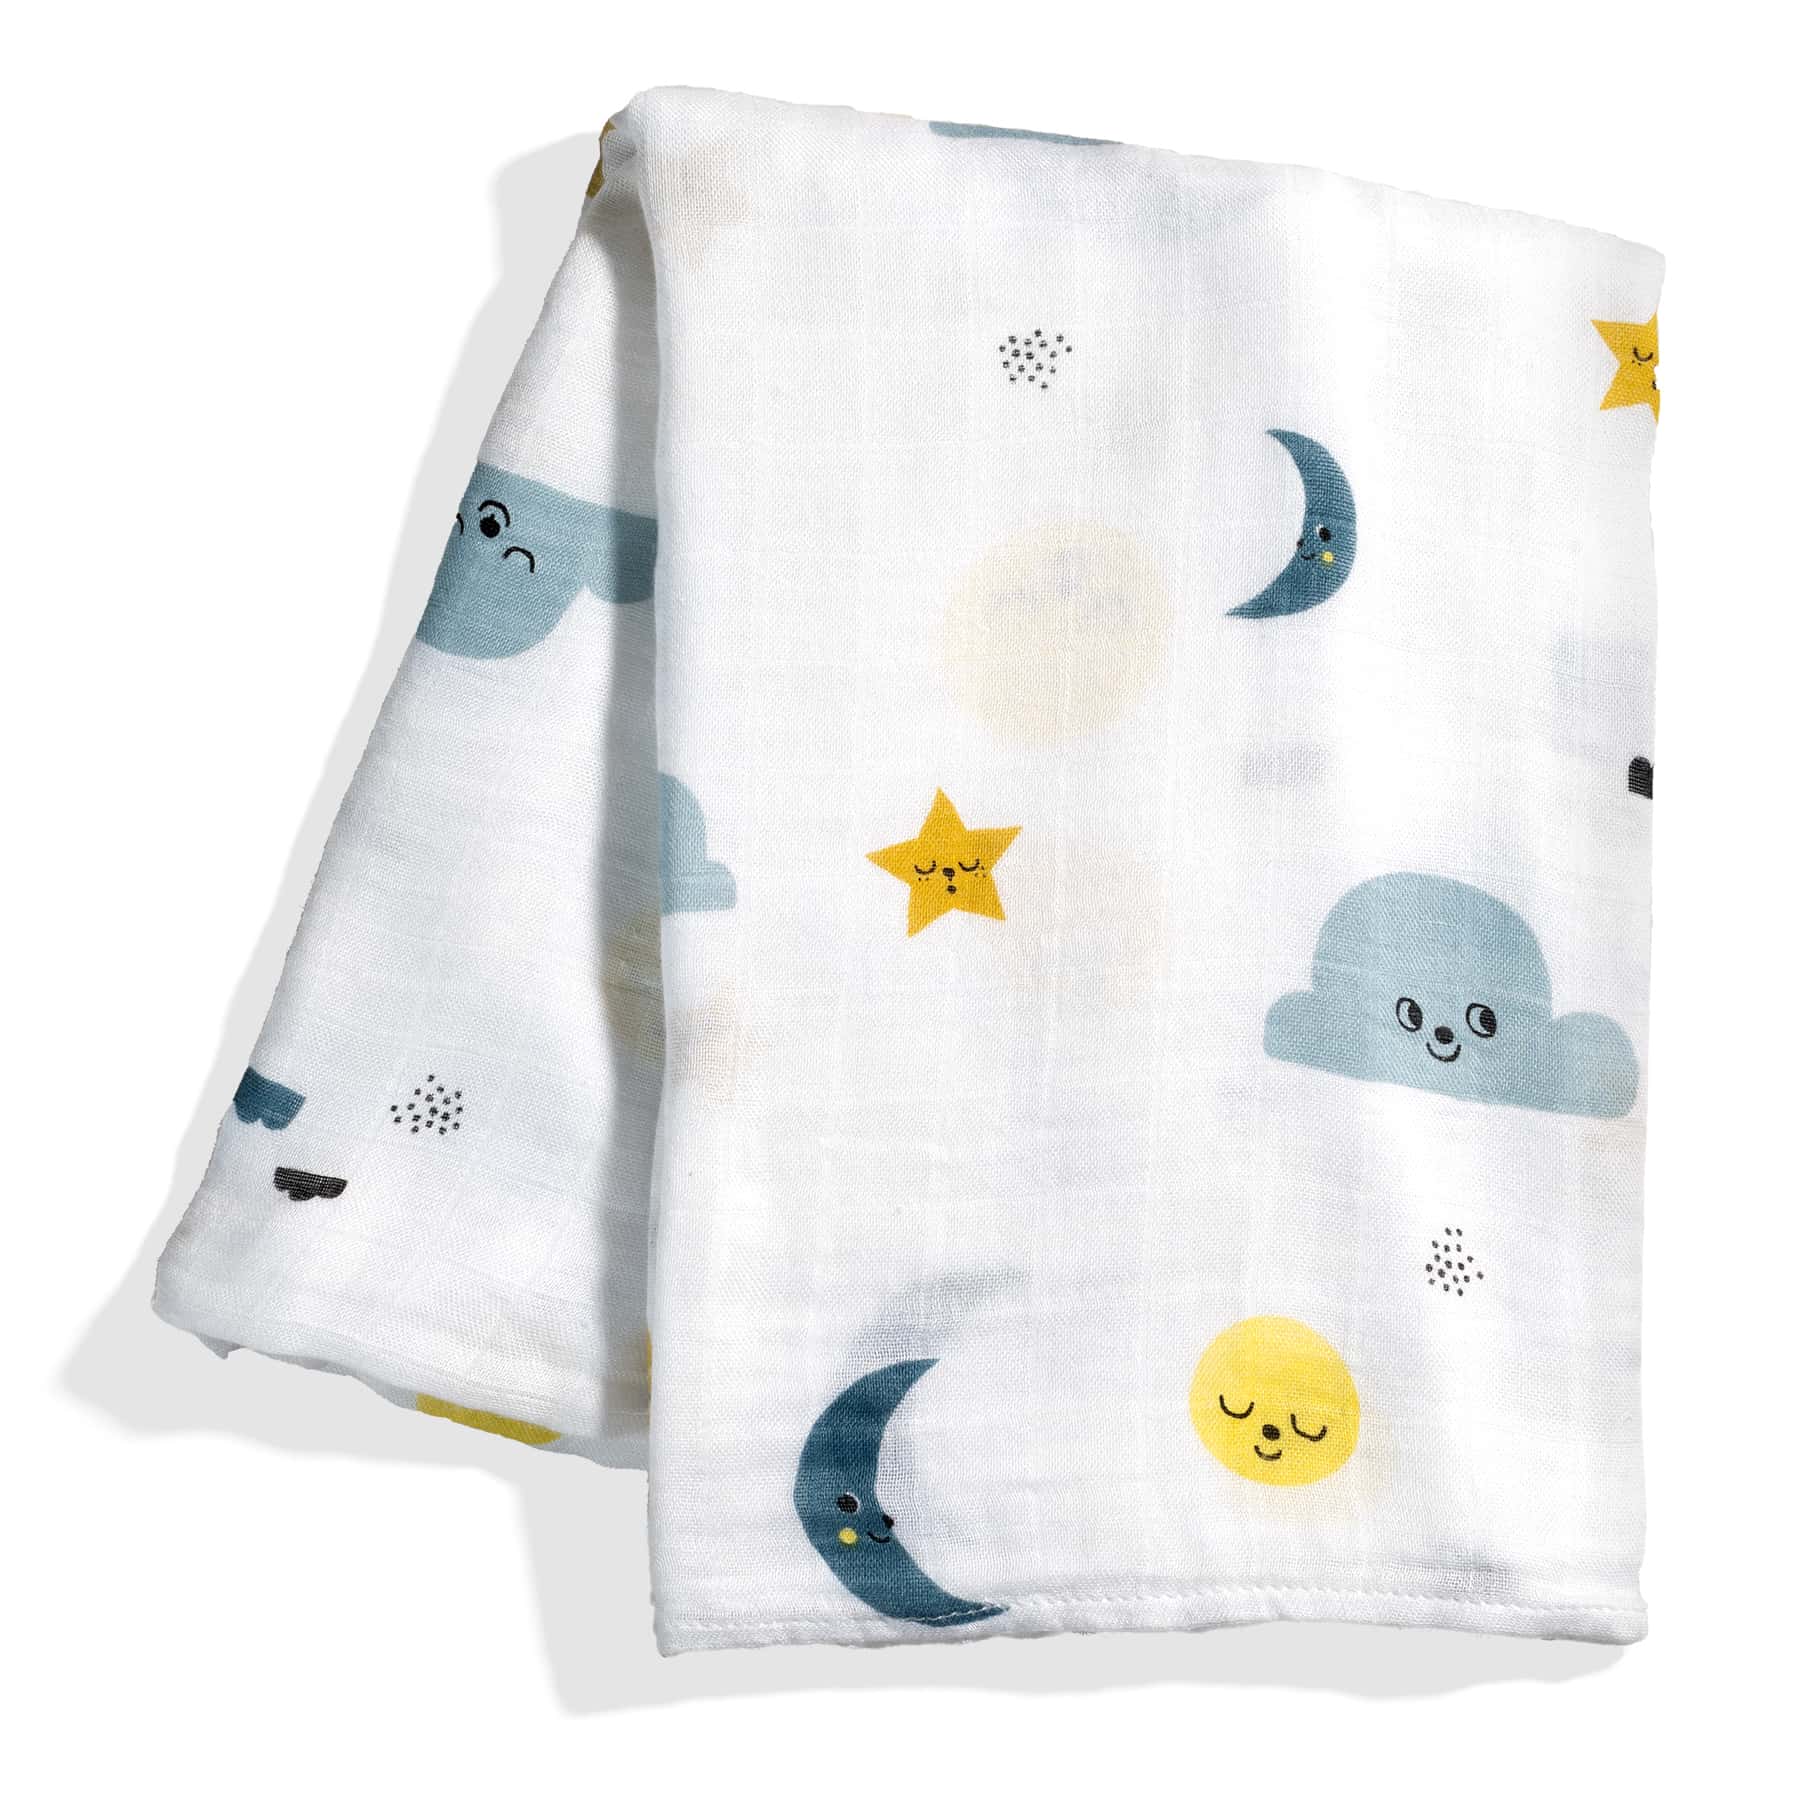 Crib sheet and Swaddle bundle - Moon's Birthday